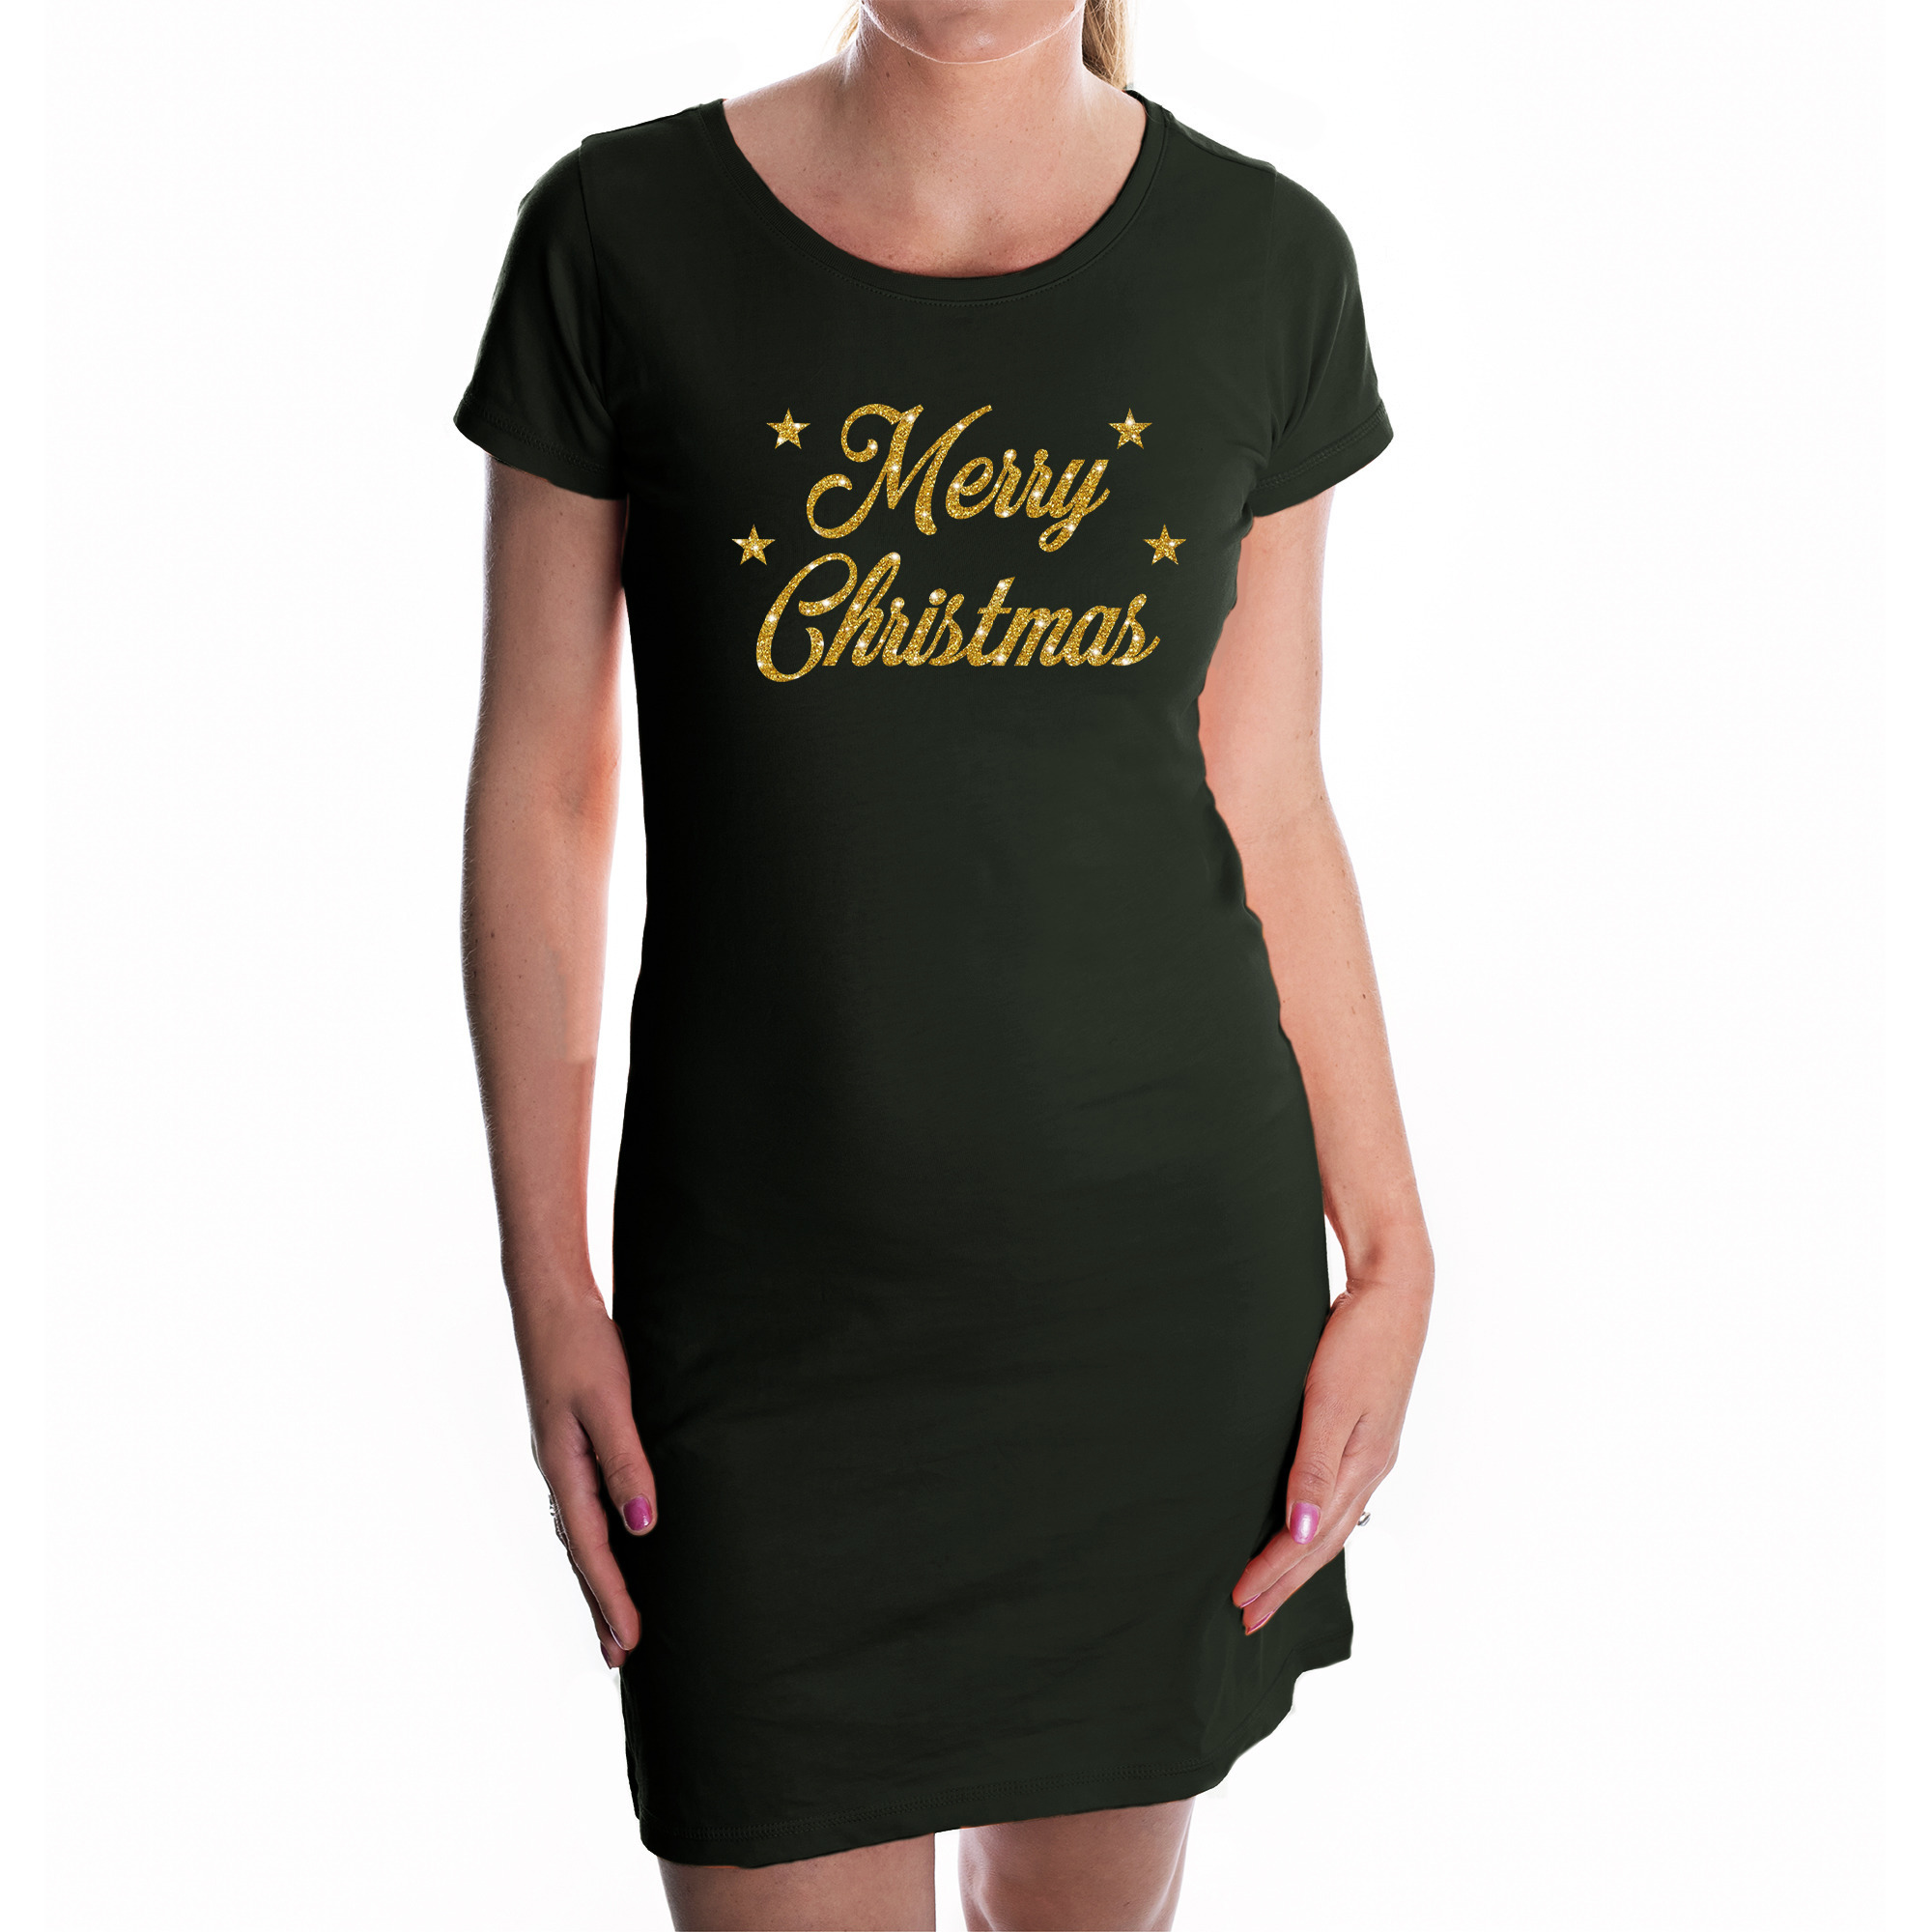 donker Uit shit Fout kerst jurkje Merry Christmas glitter goud op zwart voor dames - Kerst  kleding / outfit bestellen? | Shoppartners.nl